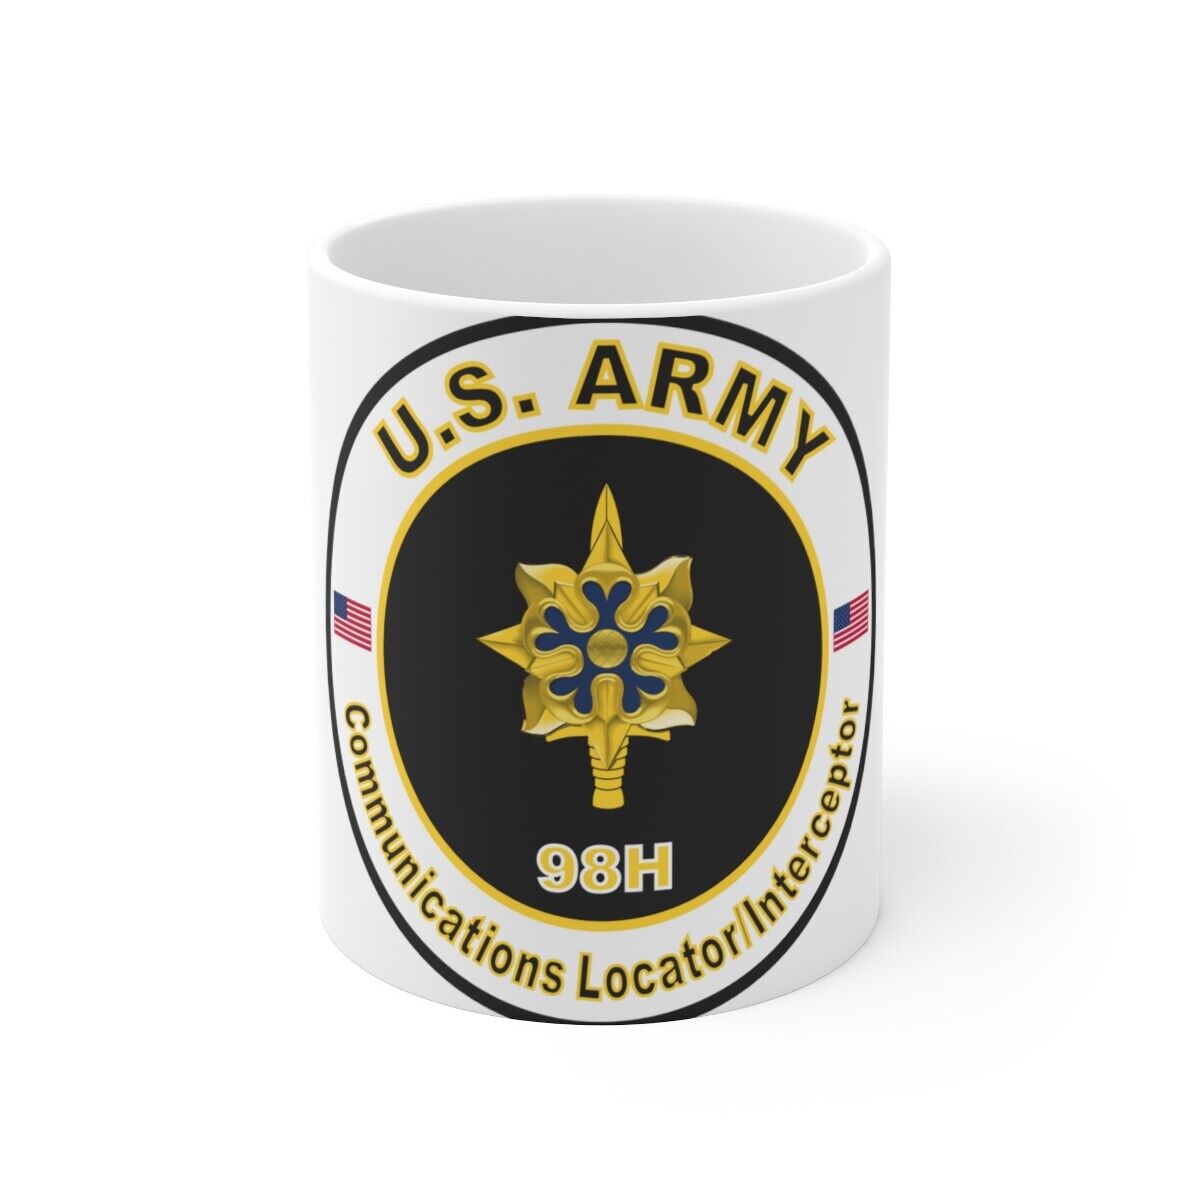 MOS 98H Communications Locator Interceptor (U.S. Army) White Coffee Cup 11oz